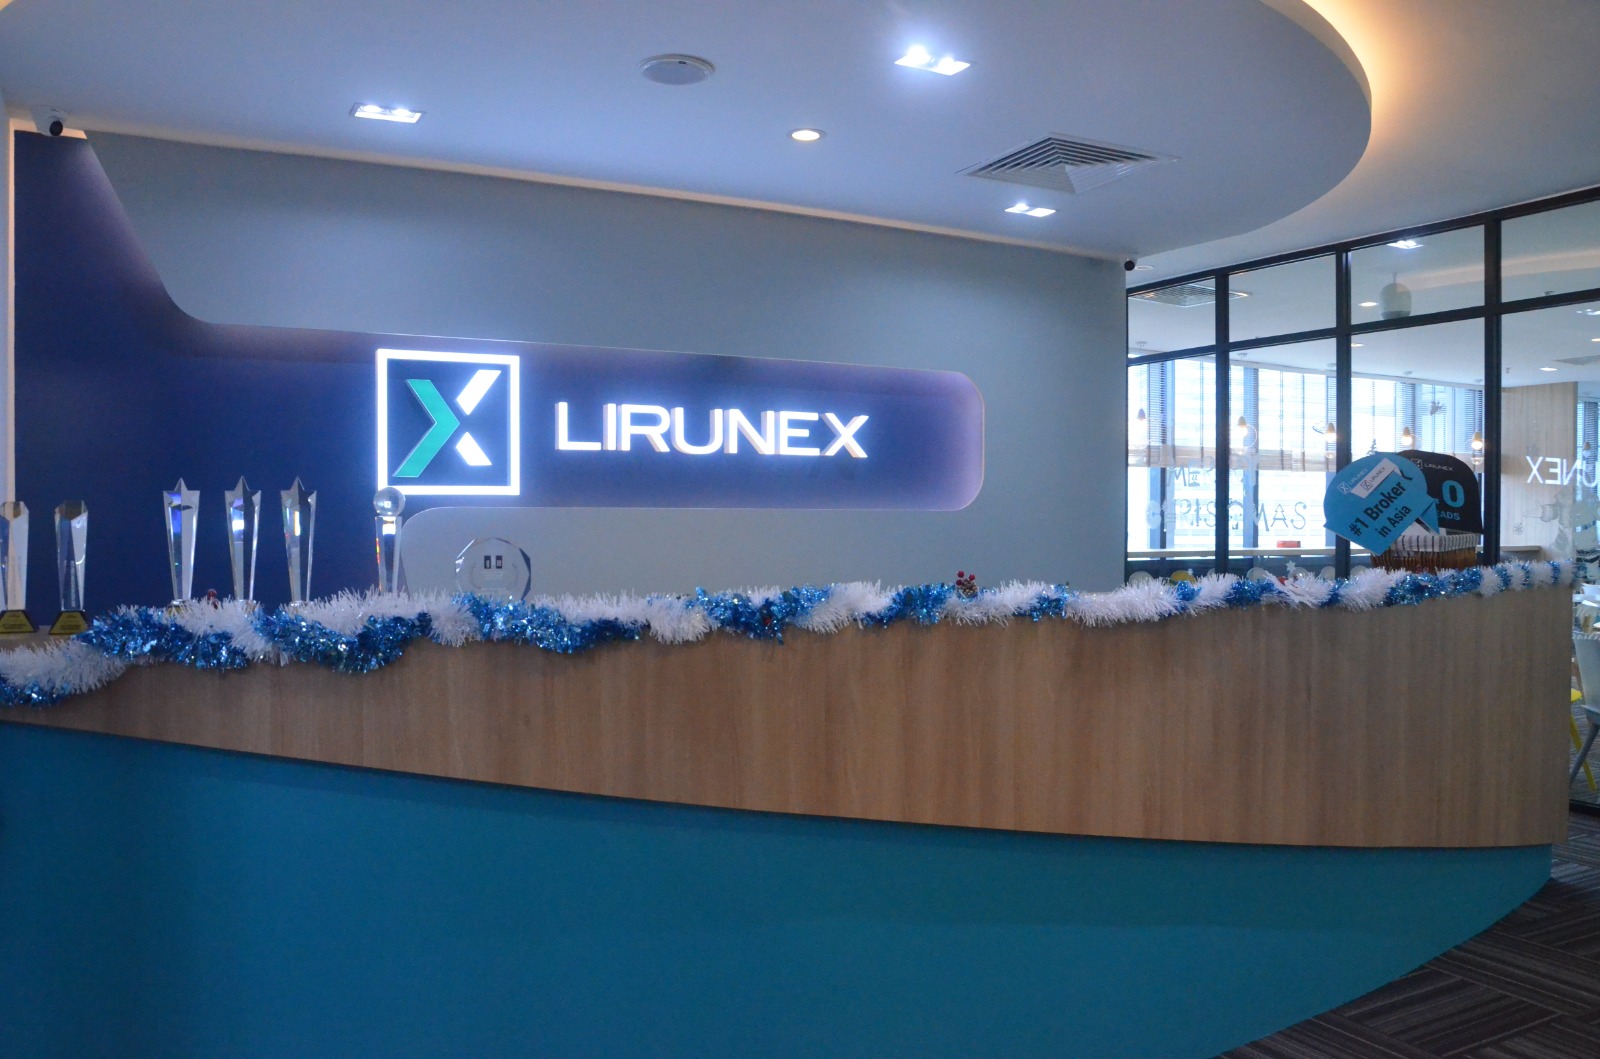 Lirunex توسع نطاق الوصول و تعزز خدمات الفوركس وعقود الفروقات في الصين وتايلاند وفيتنام